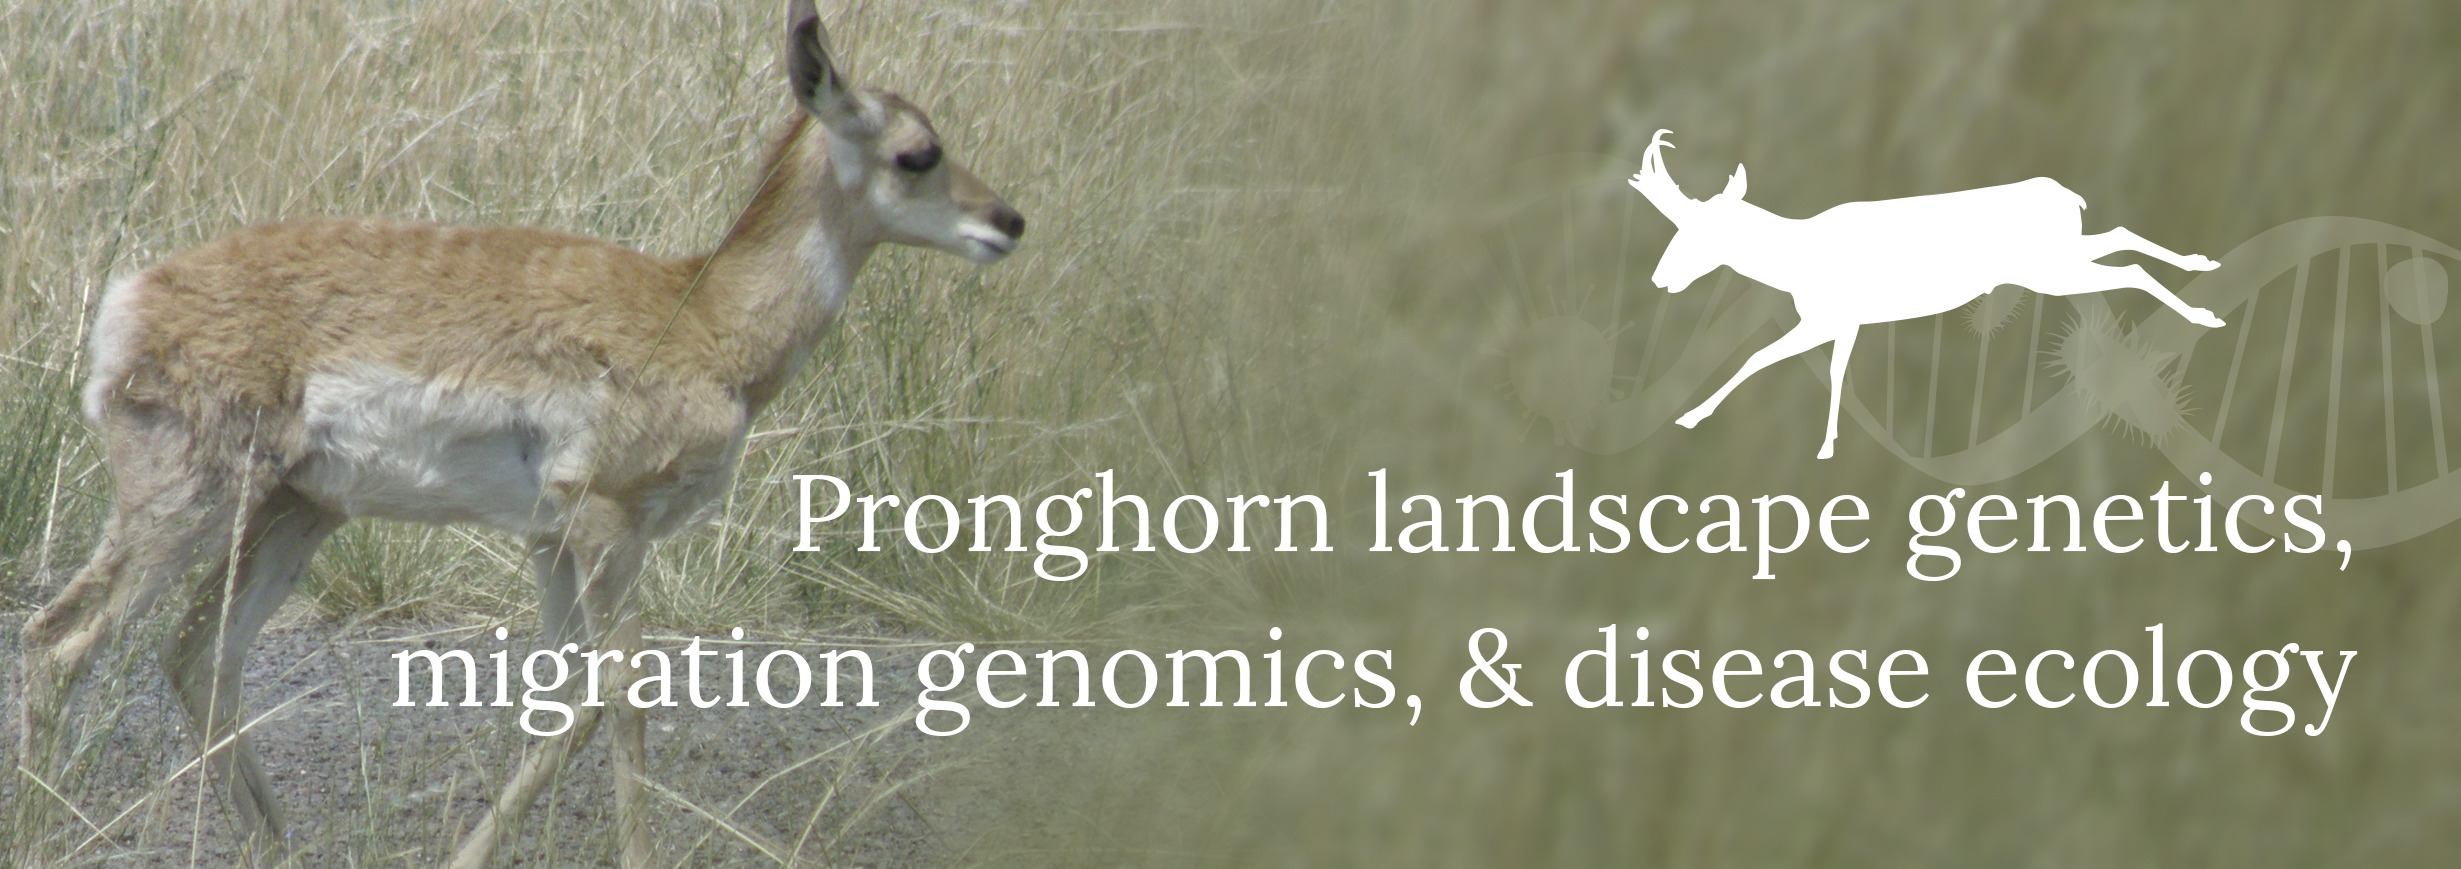 Pronghorn landscape genetics, migration genomics, and disease ecology